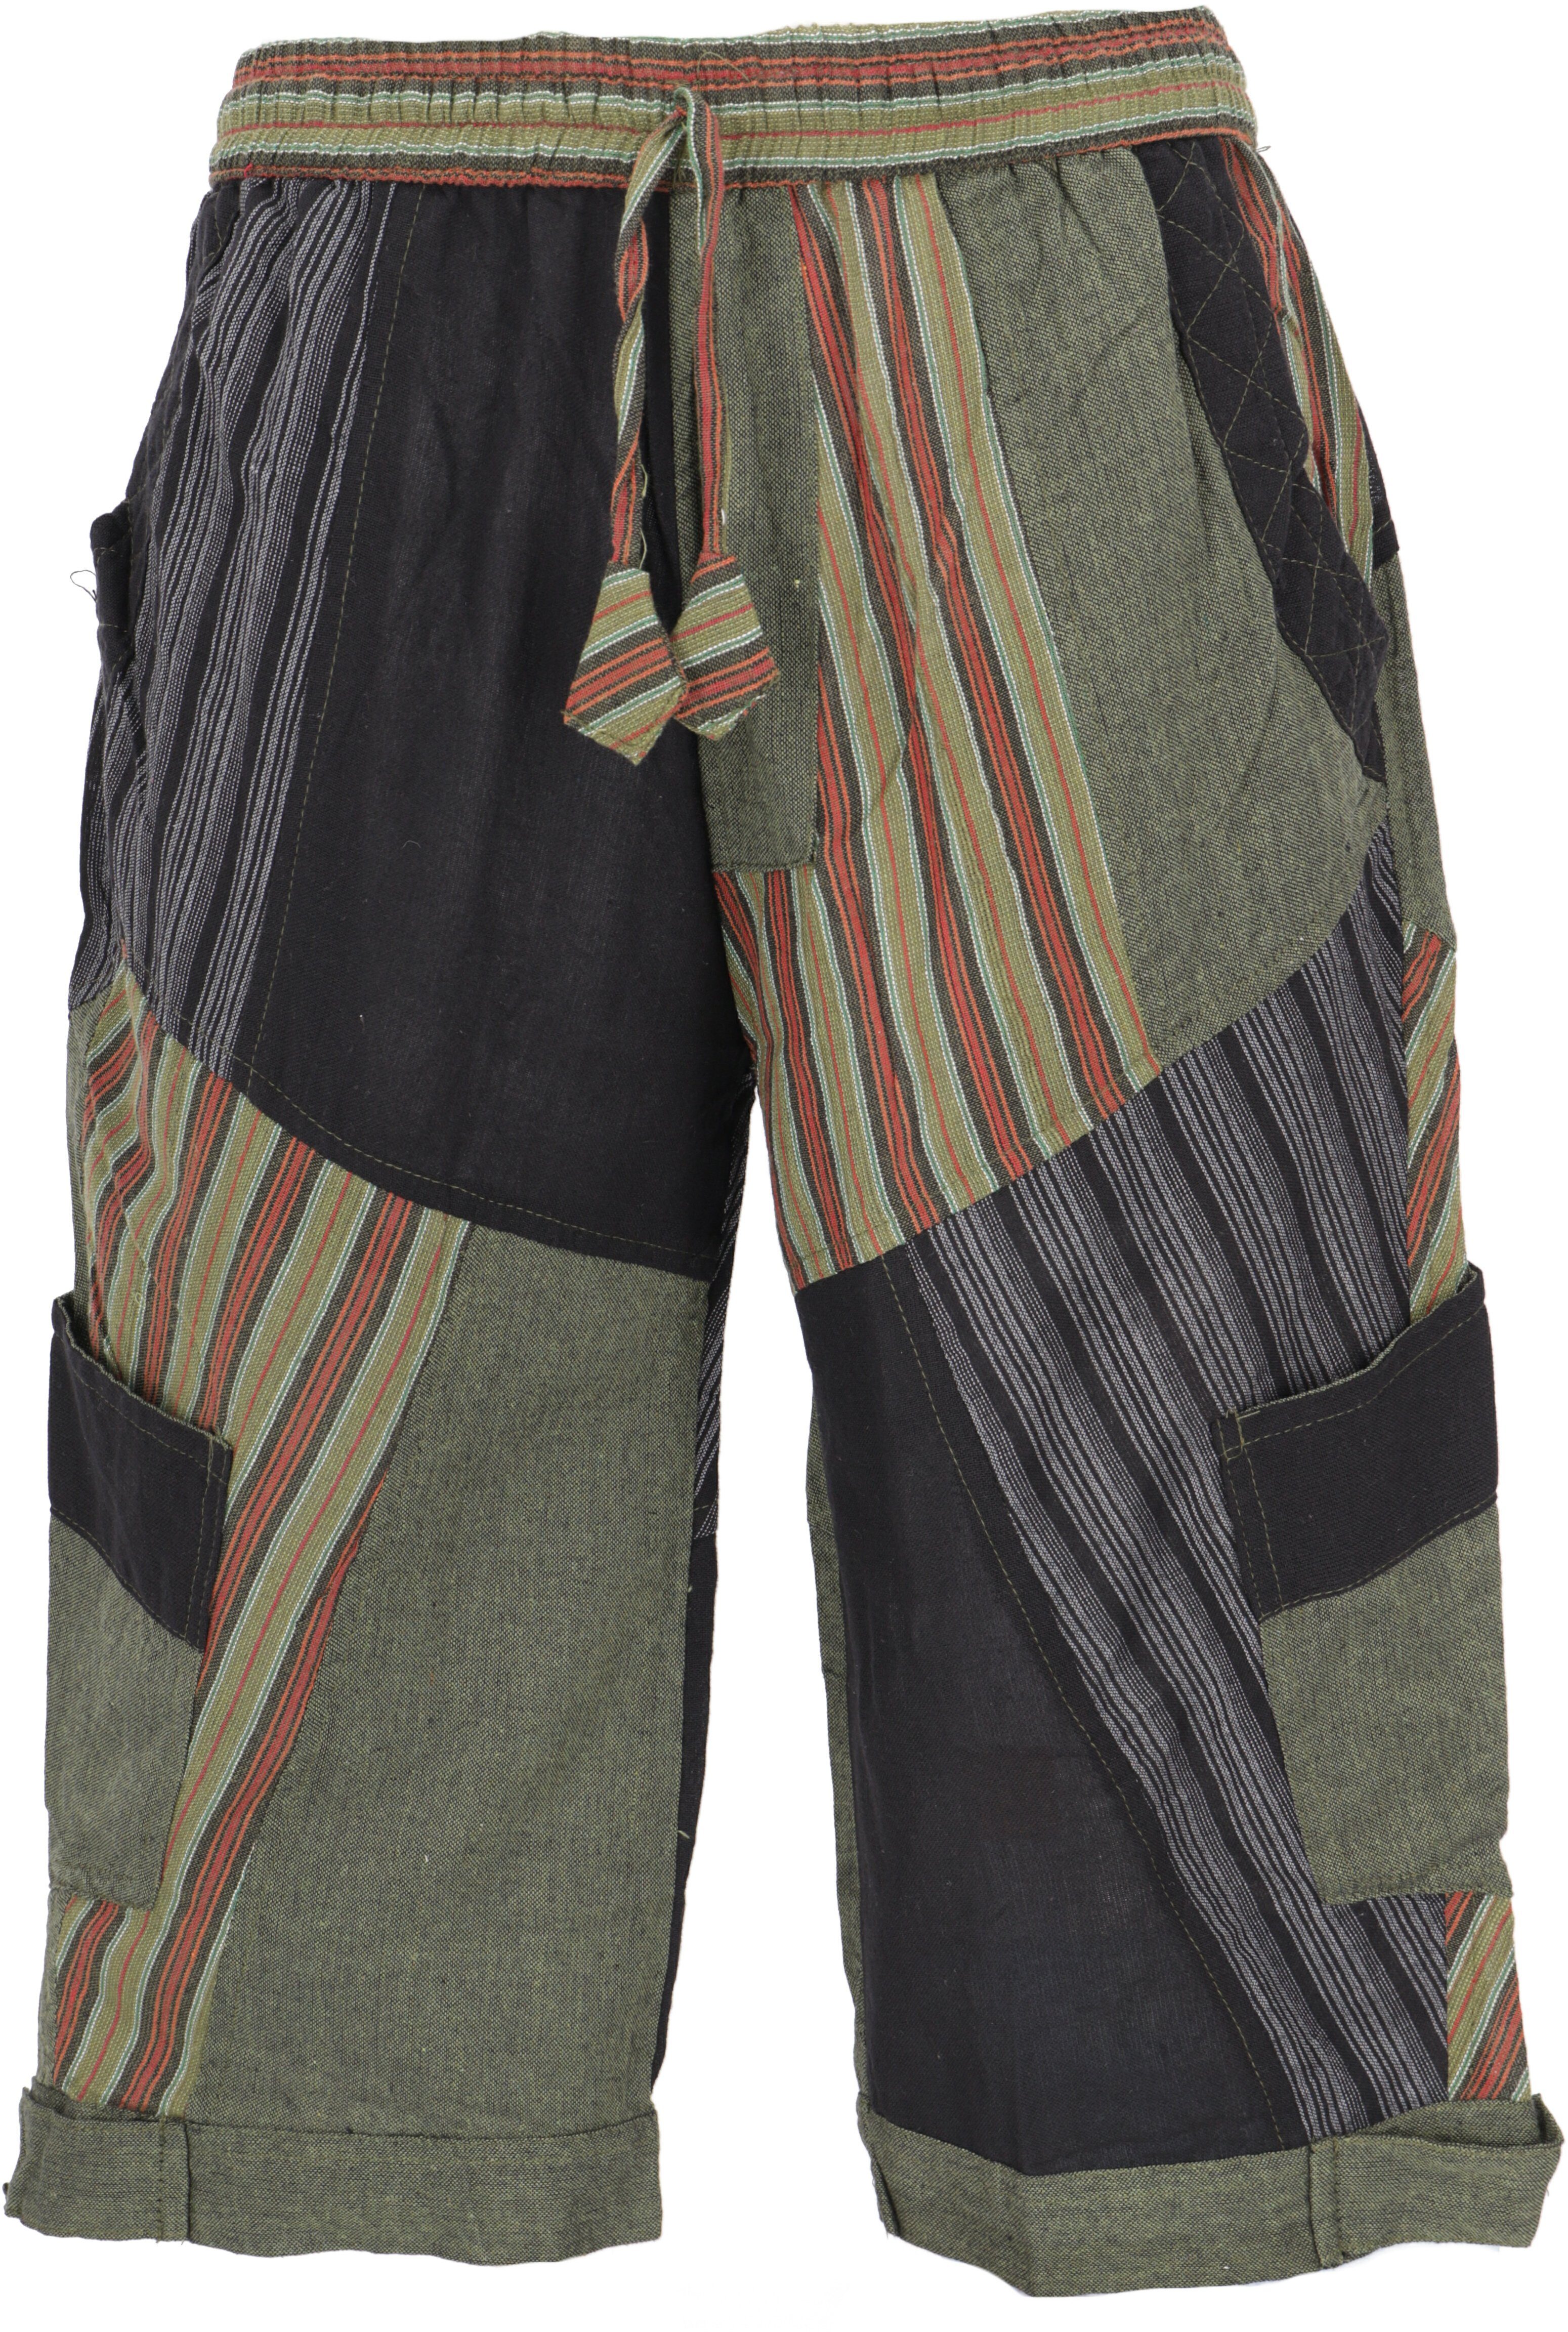 Guru-Shop Relaxhose Patchwork Yogahose, Goa Hose, Goa Shorts -.. Ethno Style, alternative Bekleidung schwarz/grün